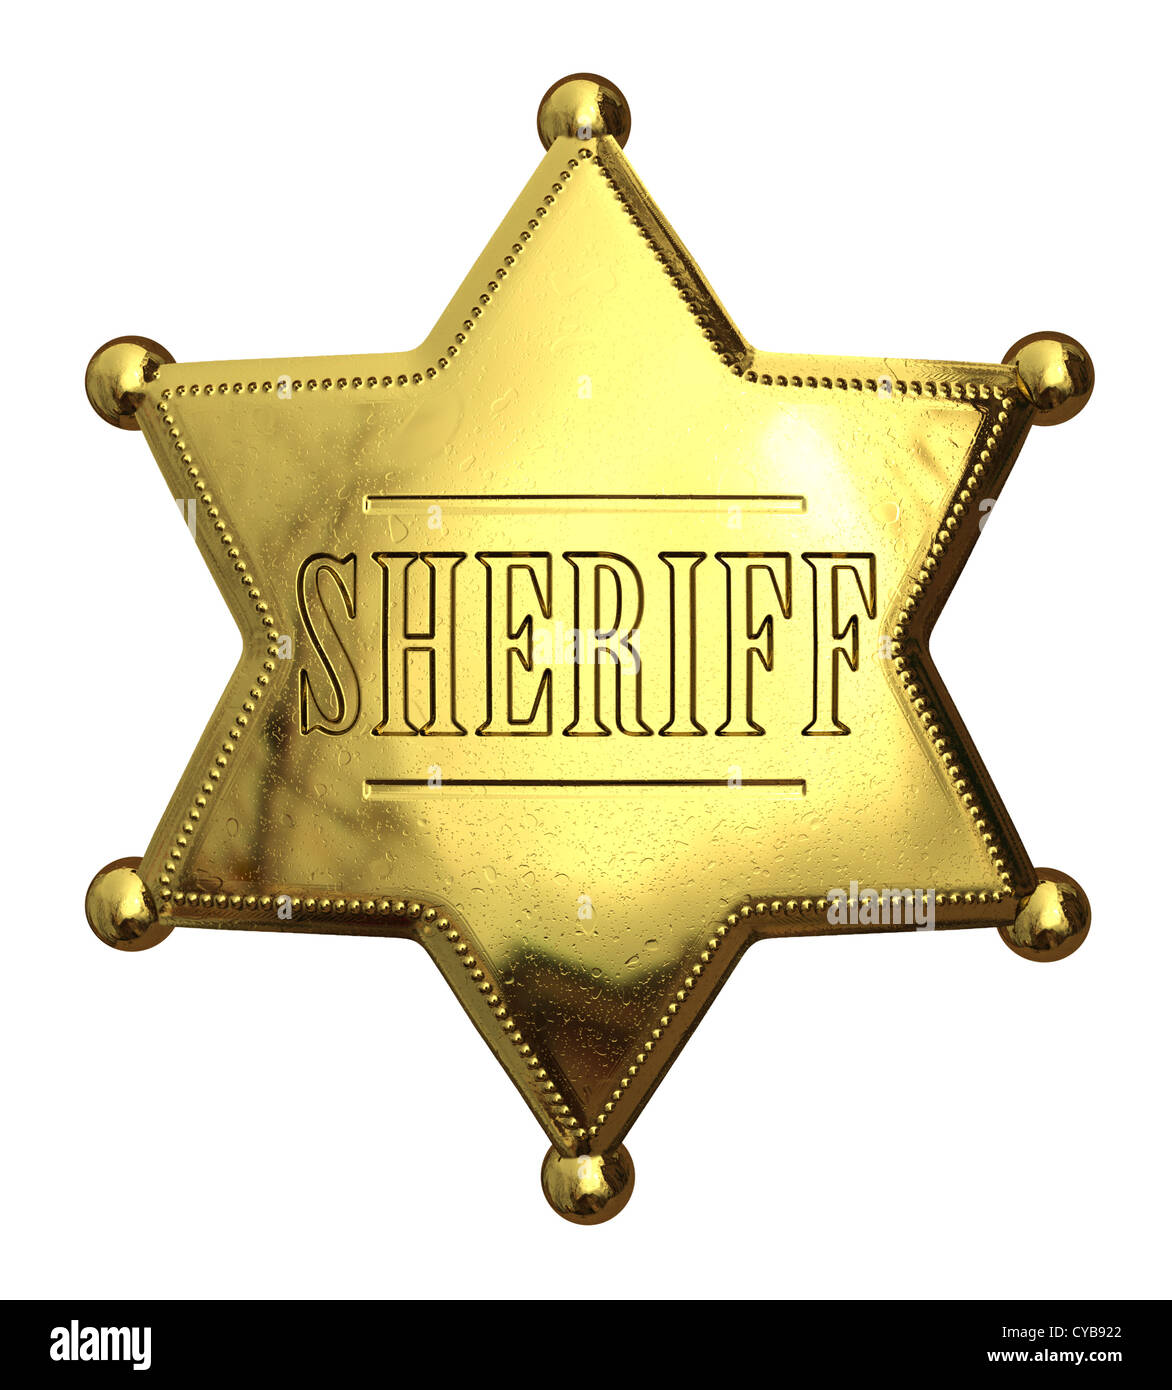 Golden sheriff's badge - isolated on white Stock Photo